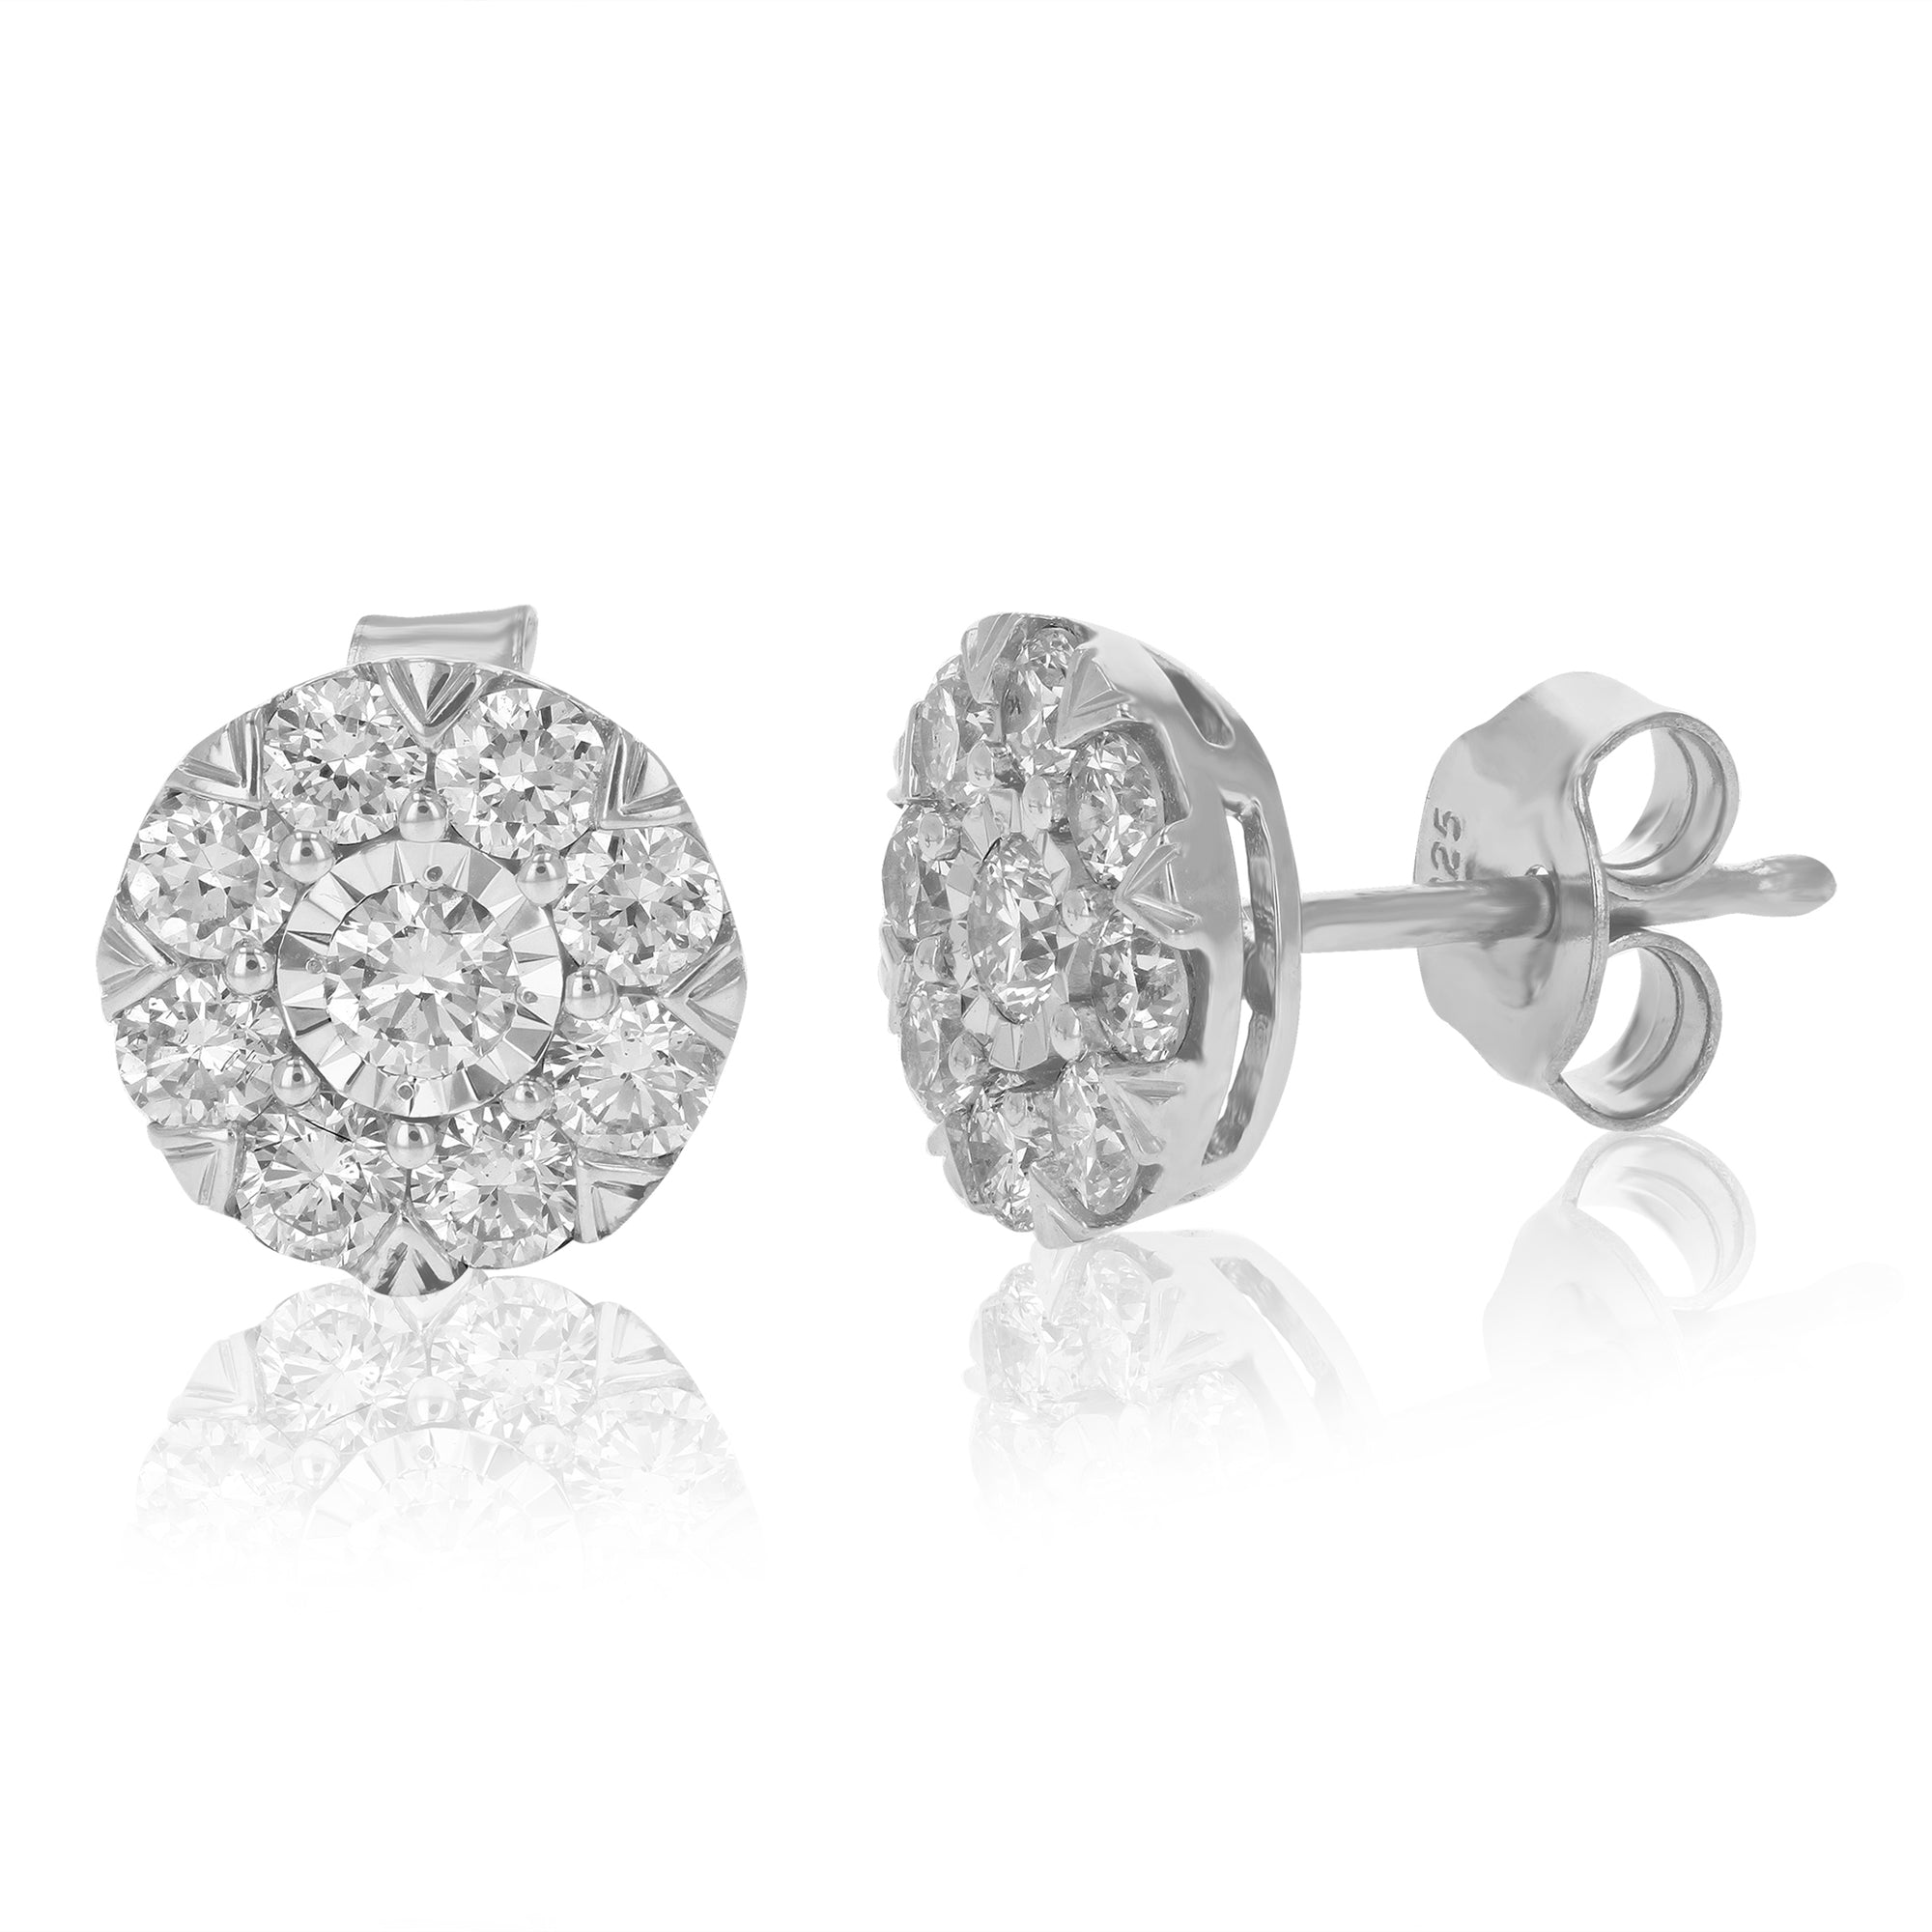 1 cttw Stud Earrings for Women, Round Lab Grown Diamond Stud Earrings in .925 Sterling Silver, Prong Setting